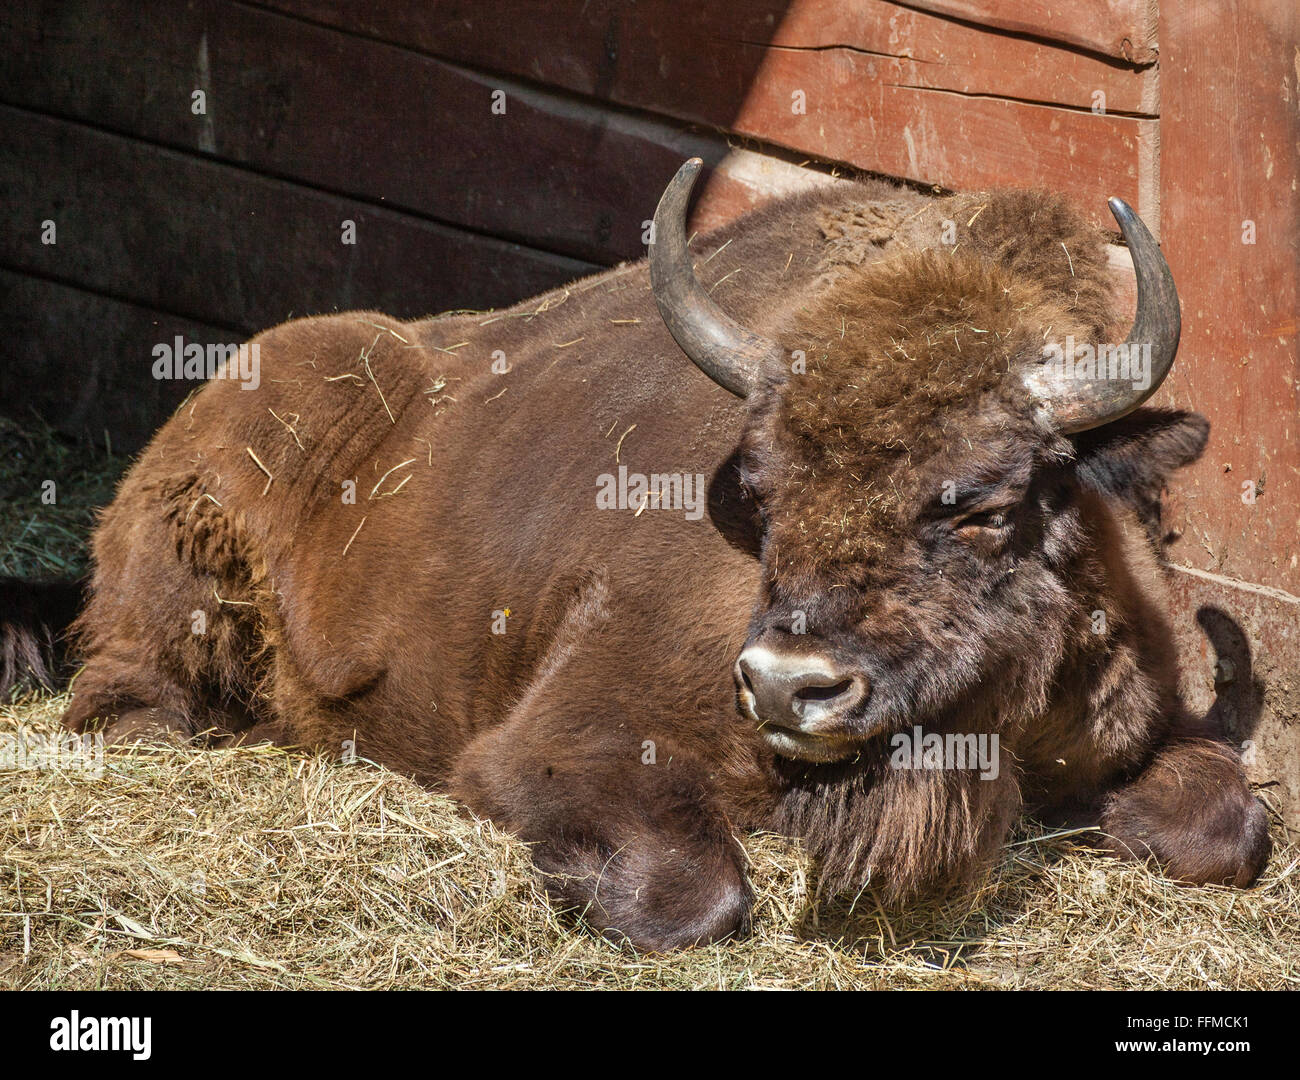 La Polonia, Slesia voivodato, Pszczyna (Pless), Pokazowa Zagroda Zubrow, legno europea bison in Pszczyna riserva di bisonti Foto Stock